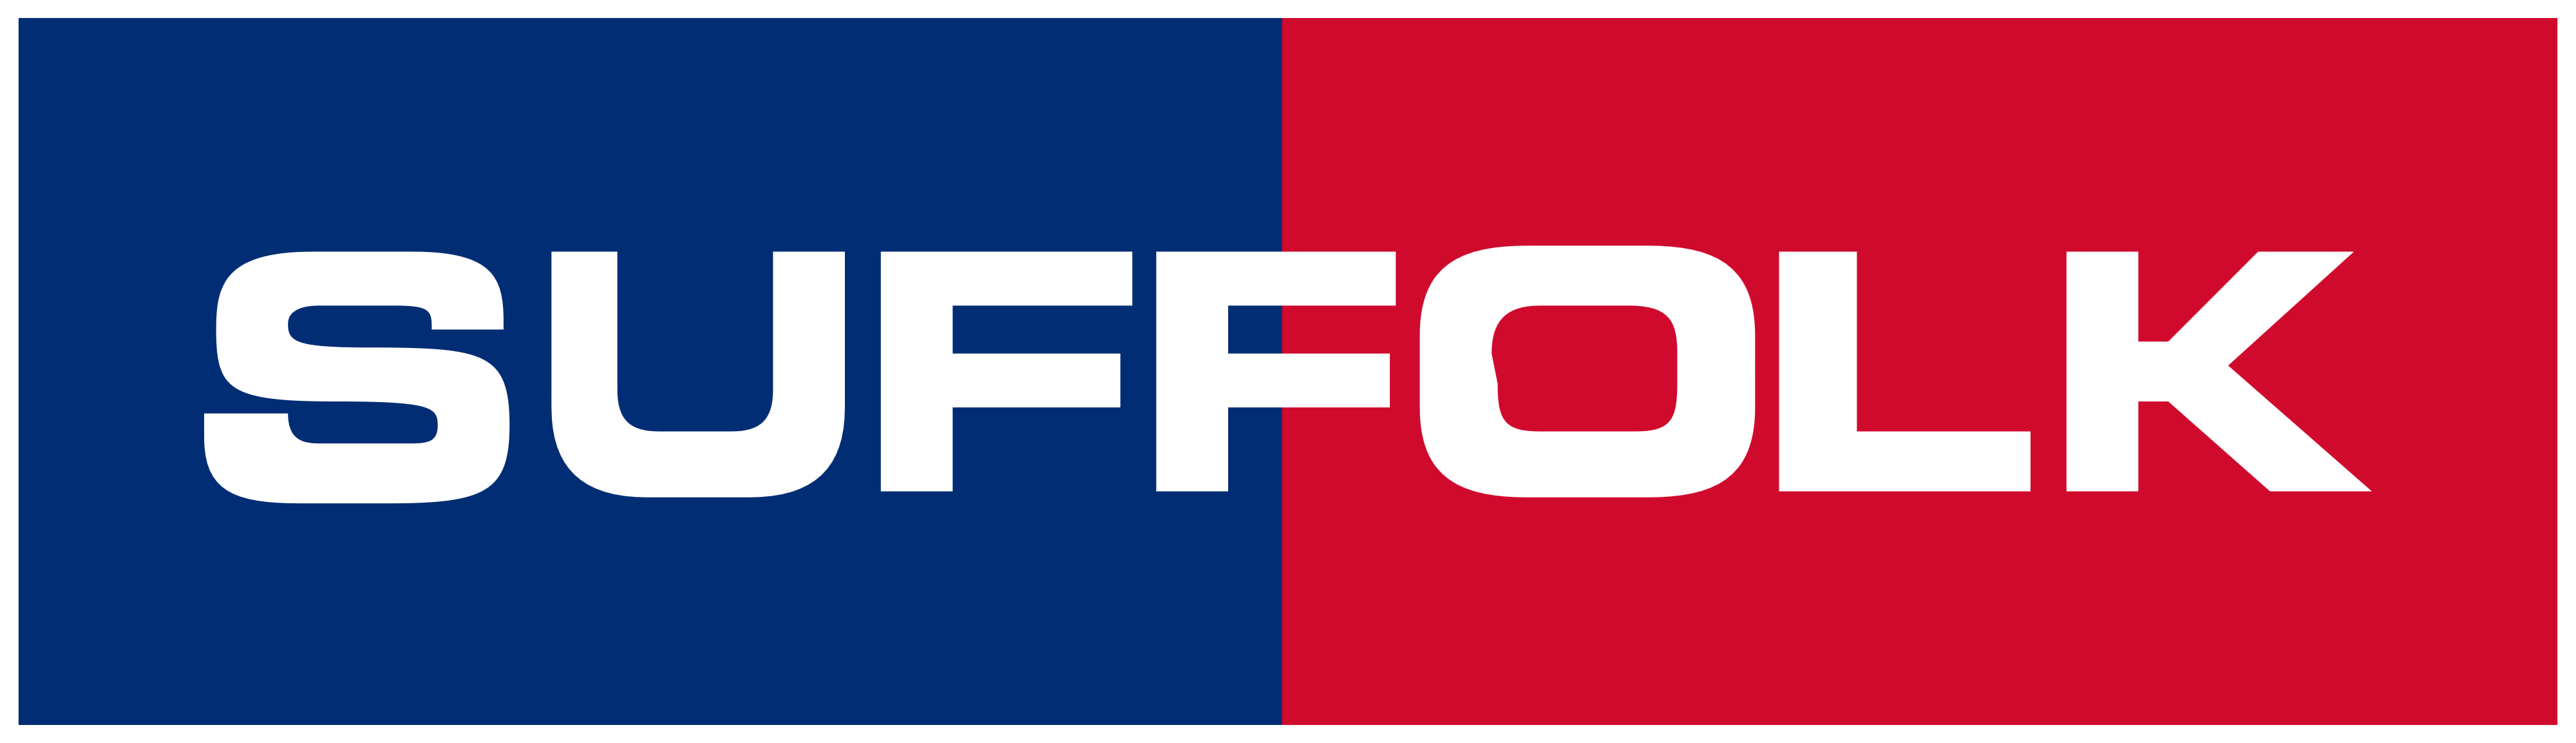 Suffolk Construction Logos Download